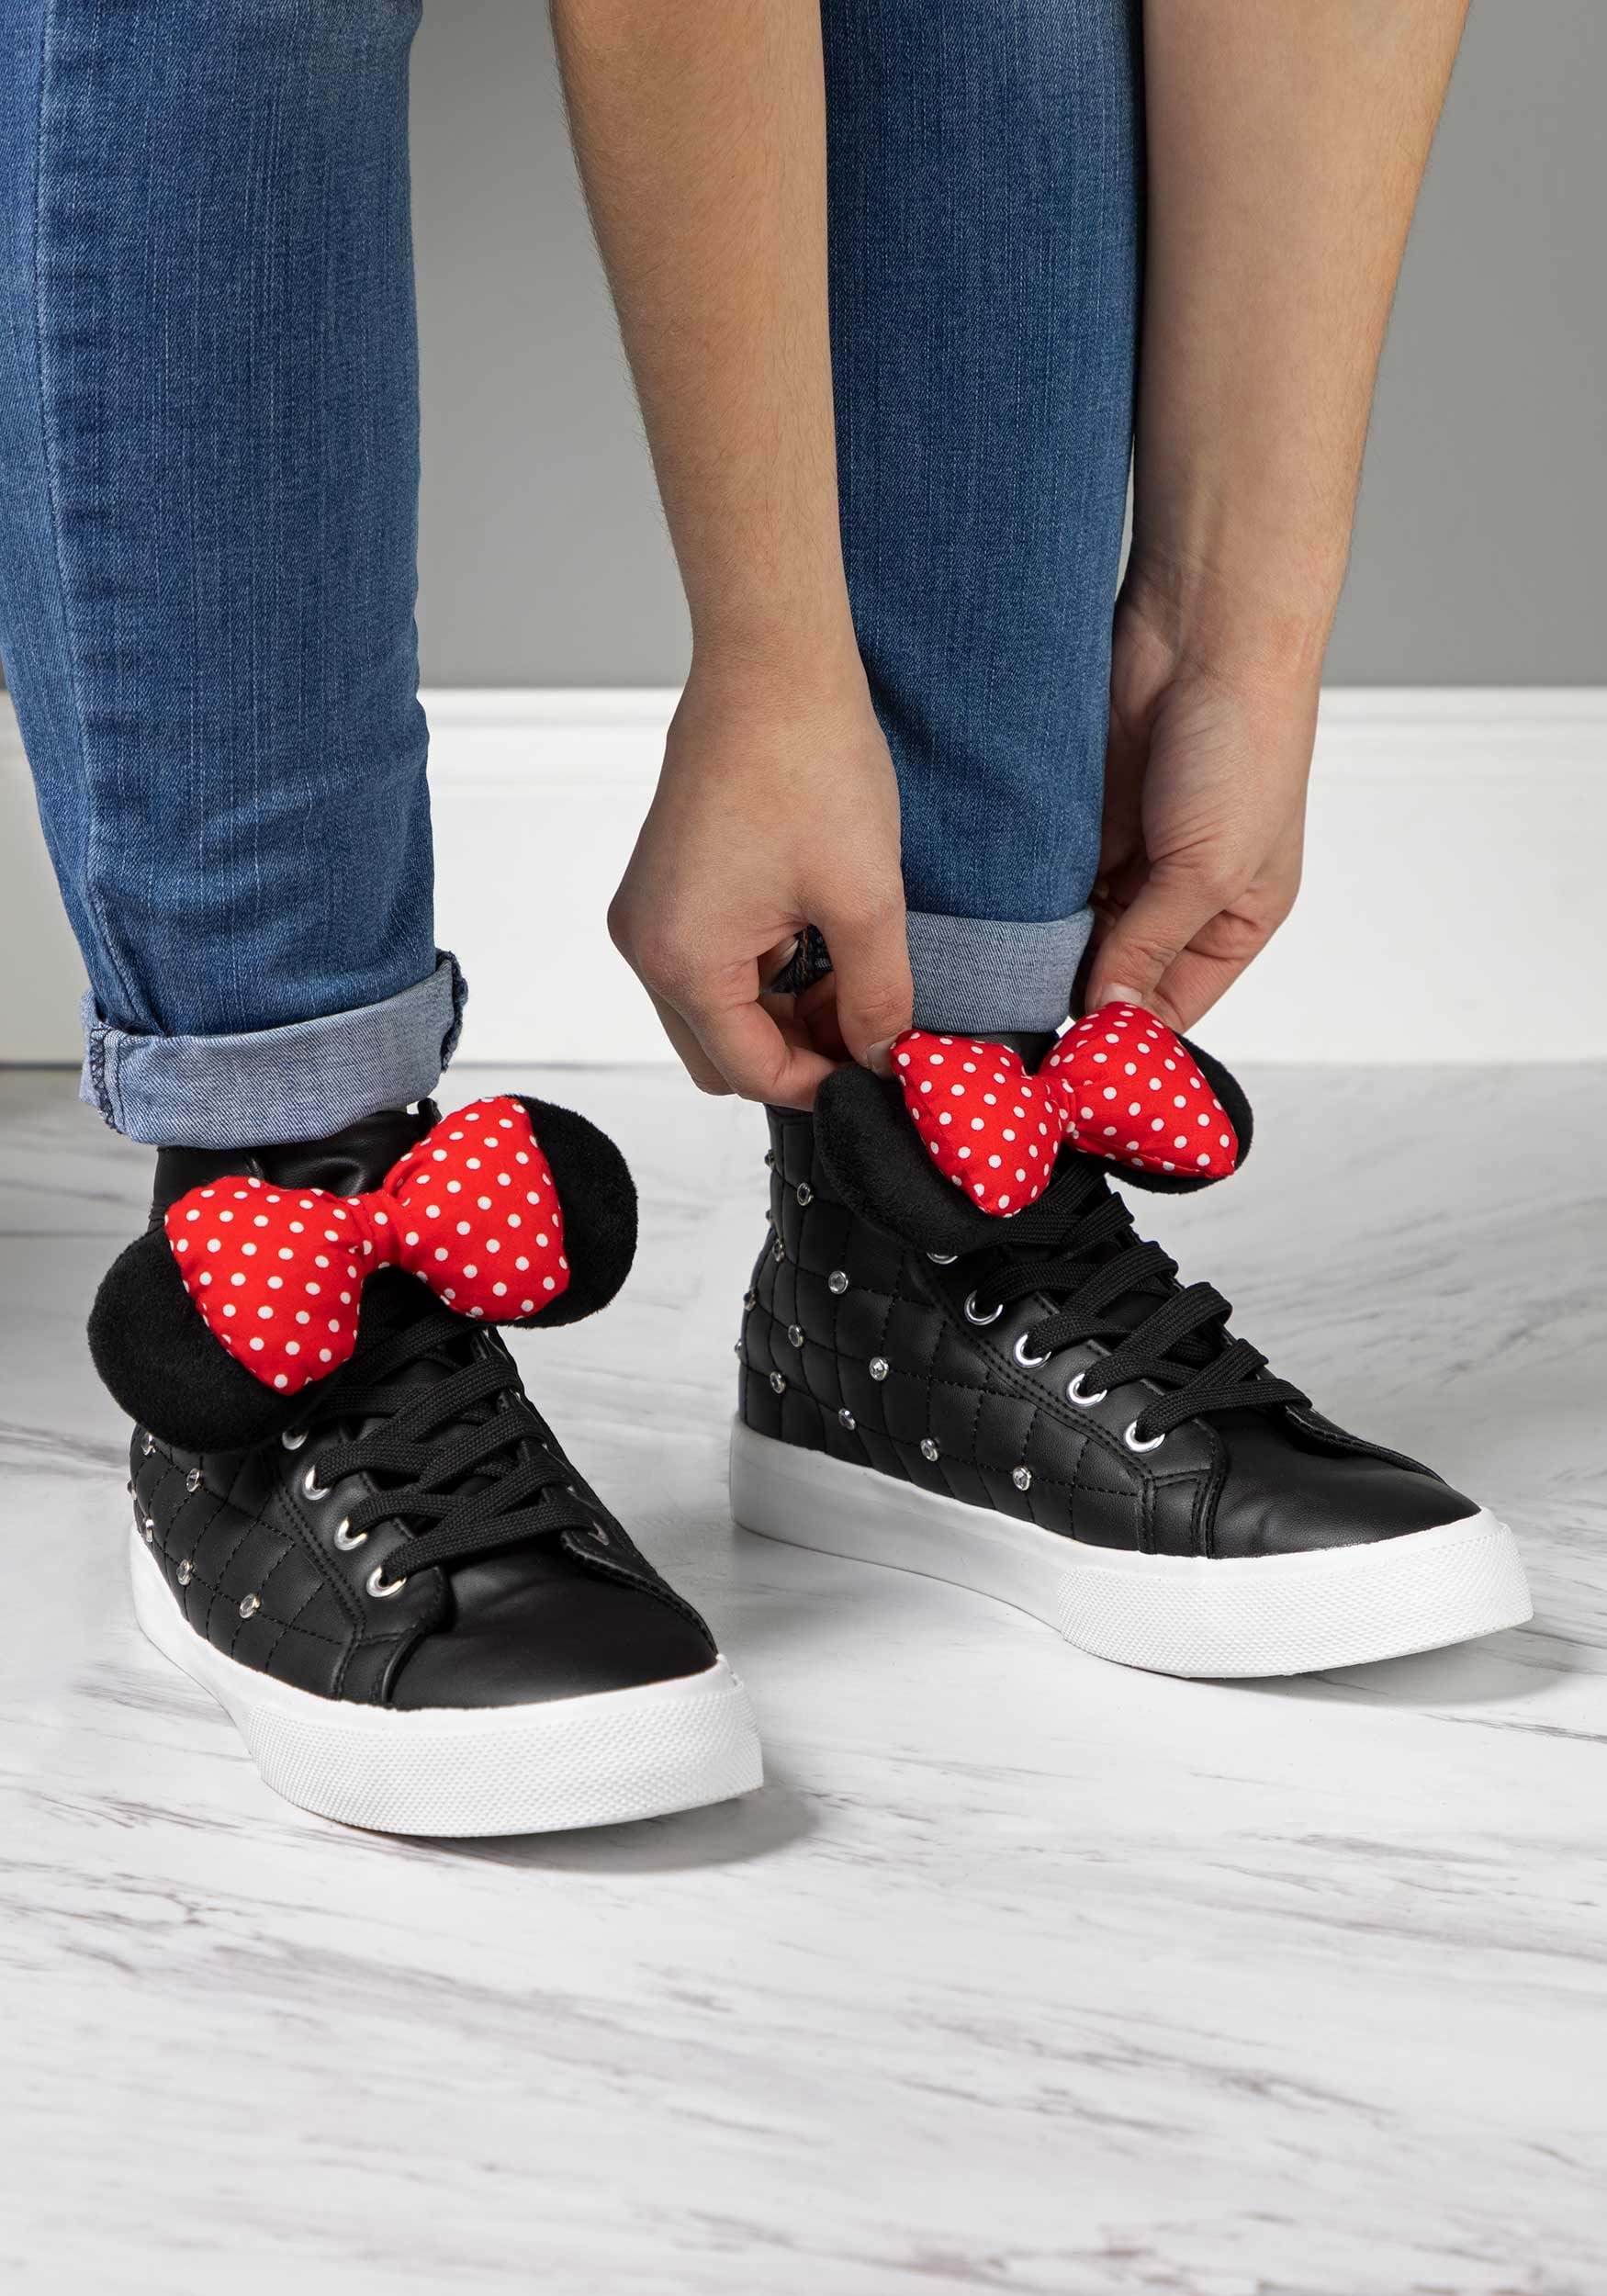 Disney Minnie Mouse Light Up Toddler Girls Sport Sandals : Target